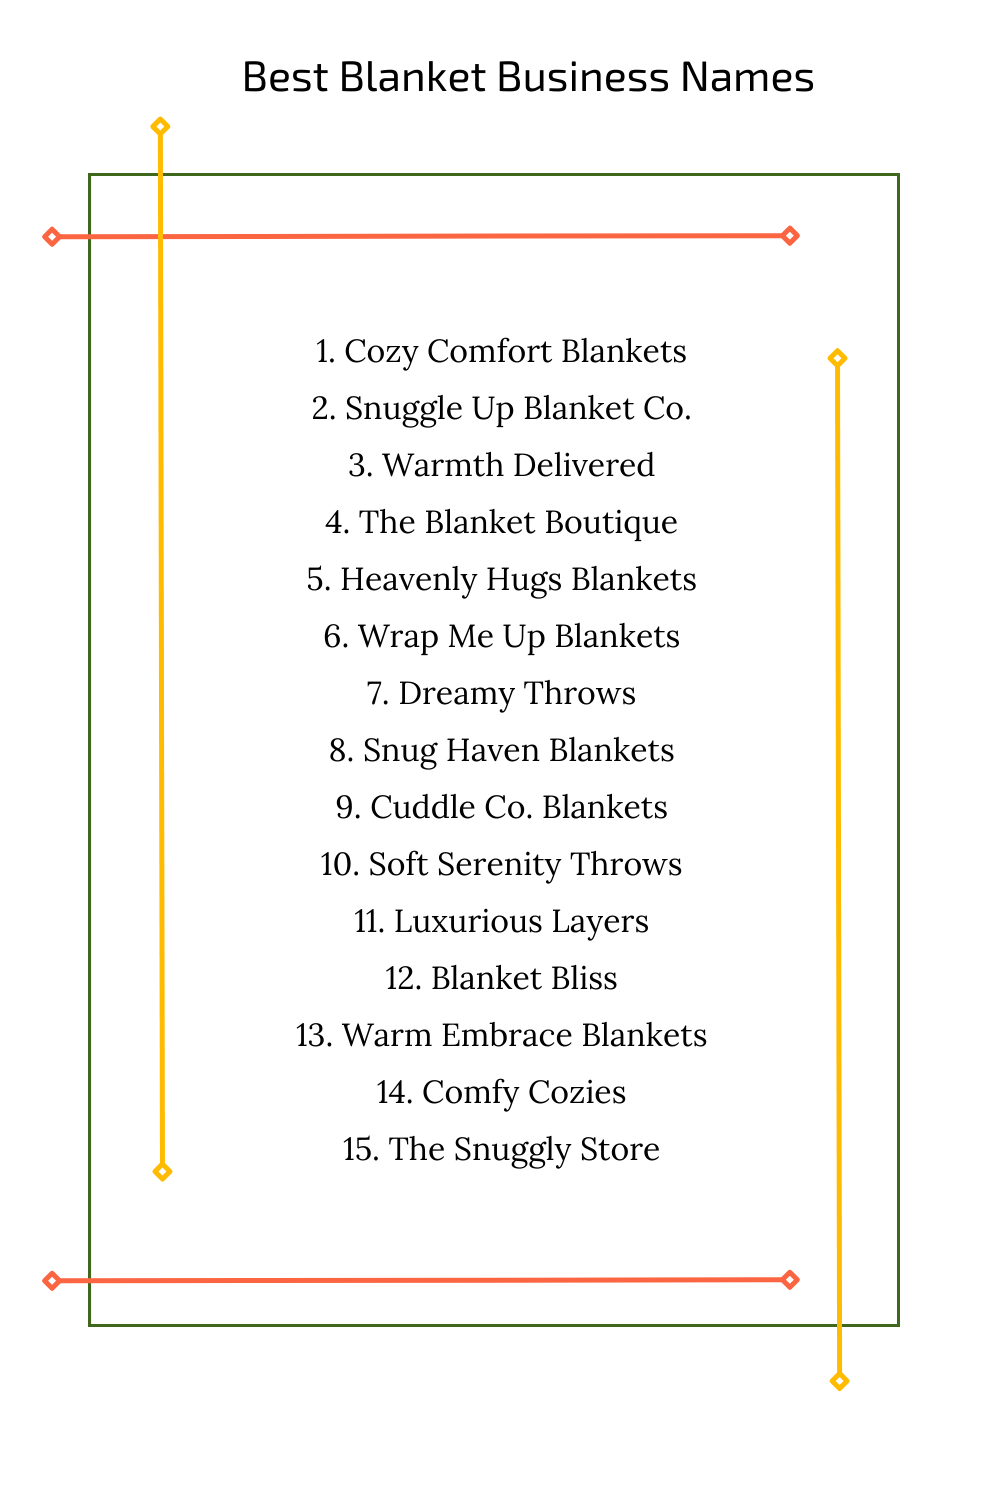 Best Blanket Business Names